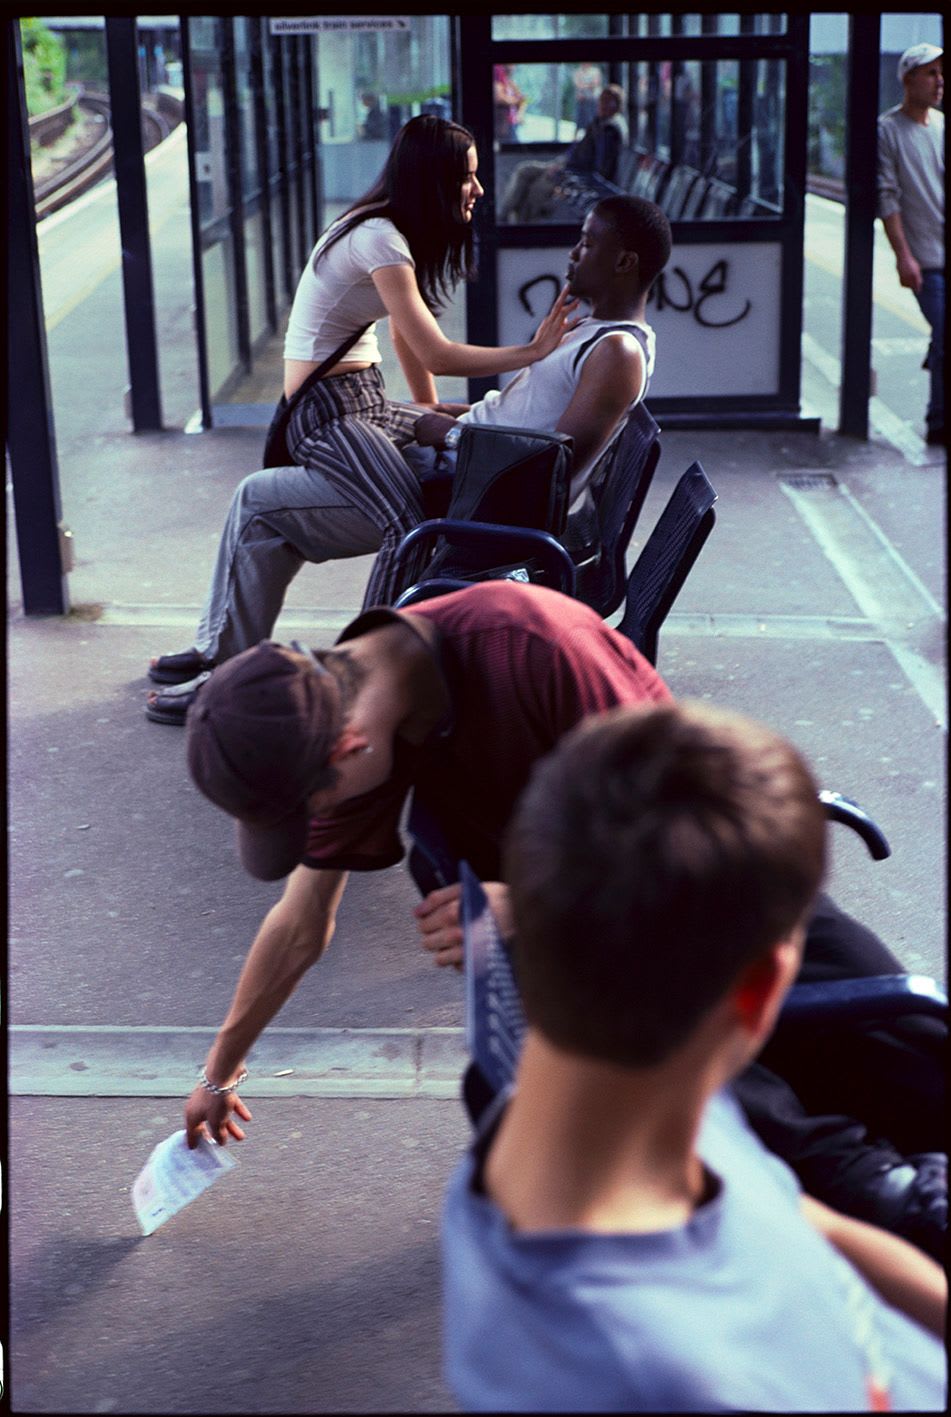 Image of teens on a train platform by Simon Wheatley